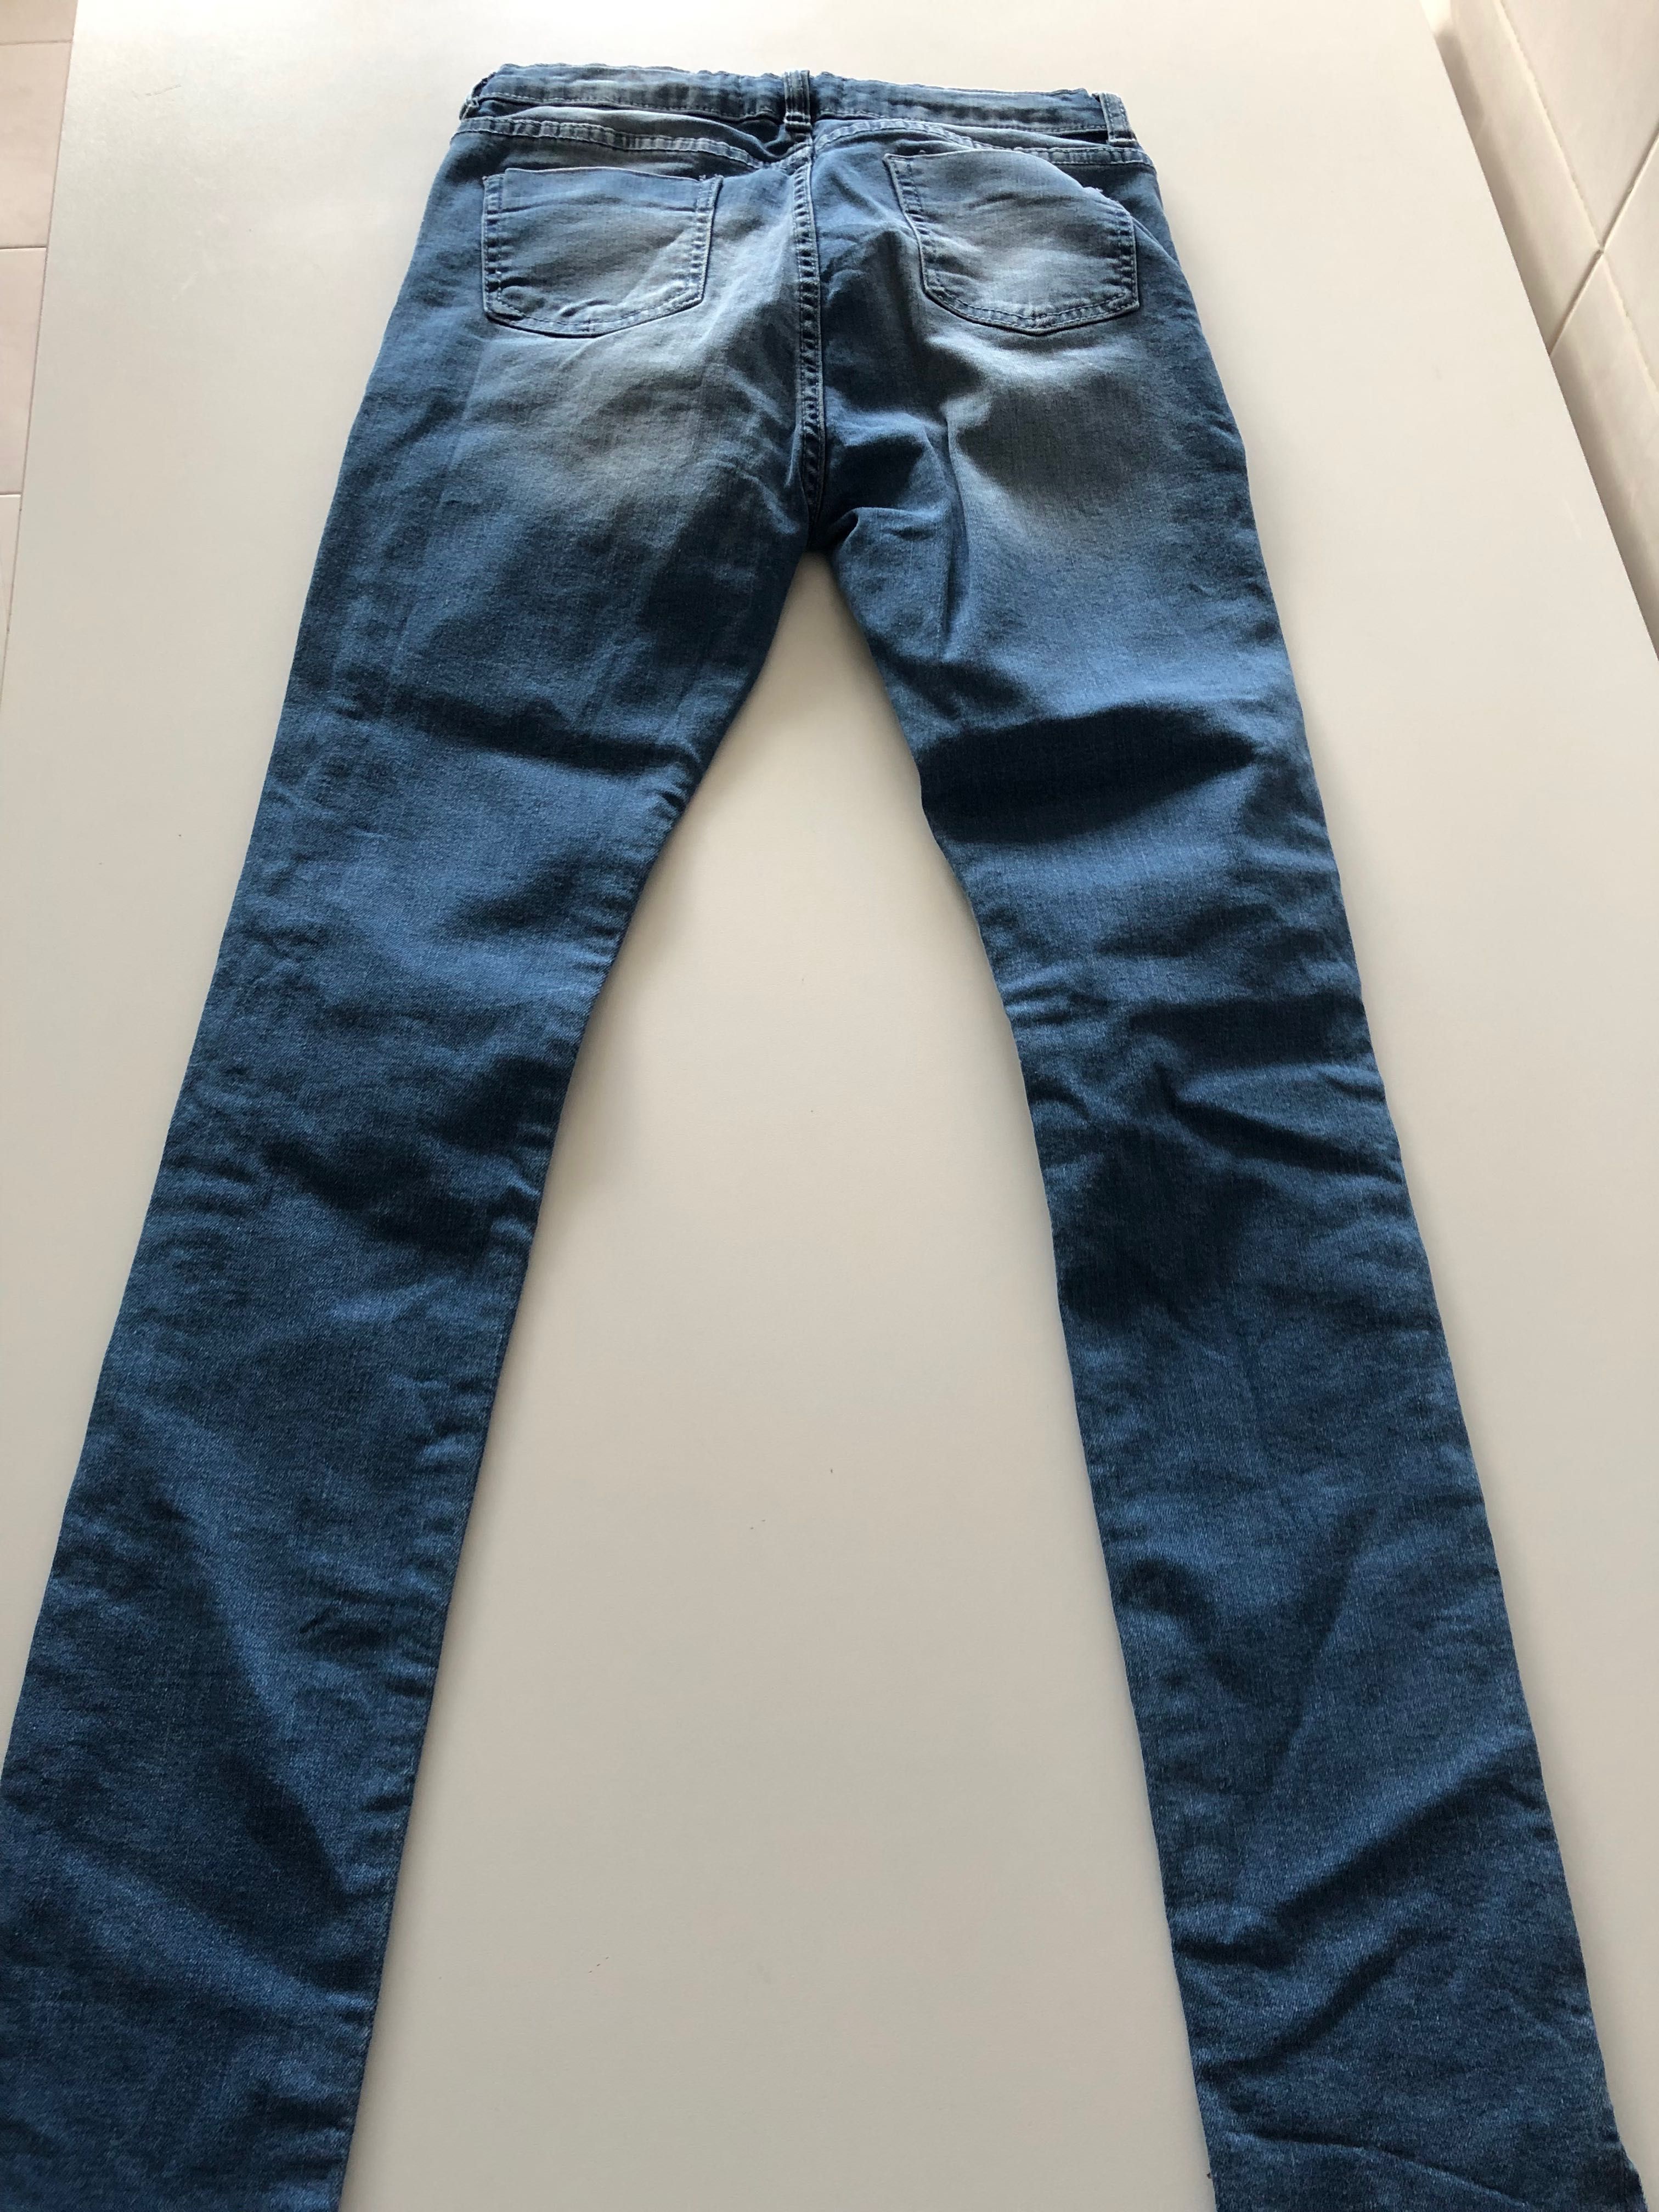 Novo - Jeans - 13/14 anos - Zippy